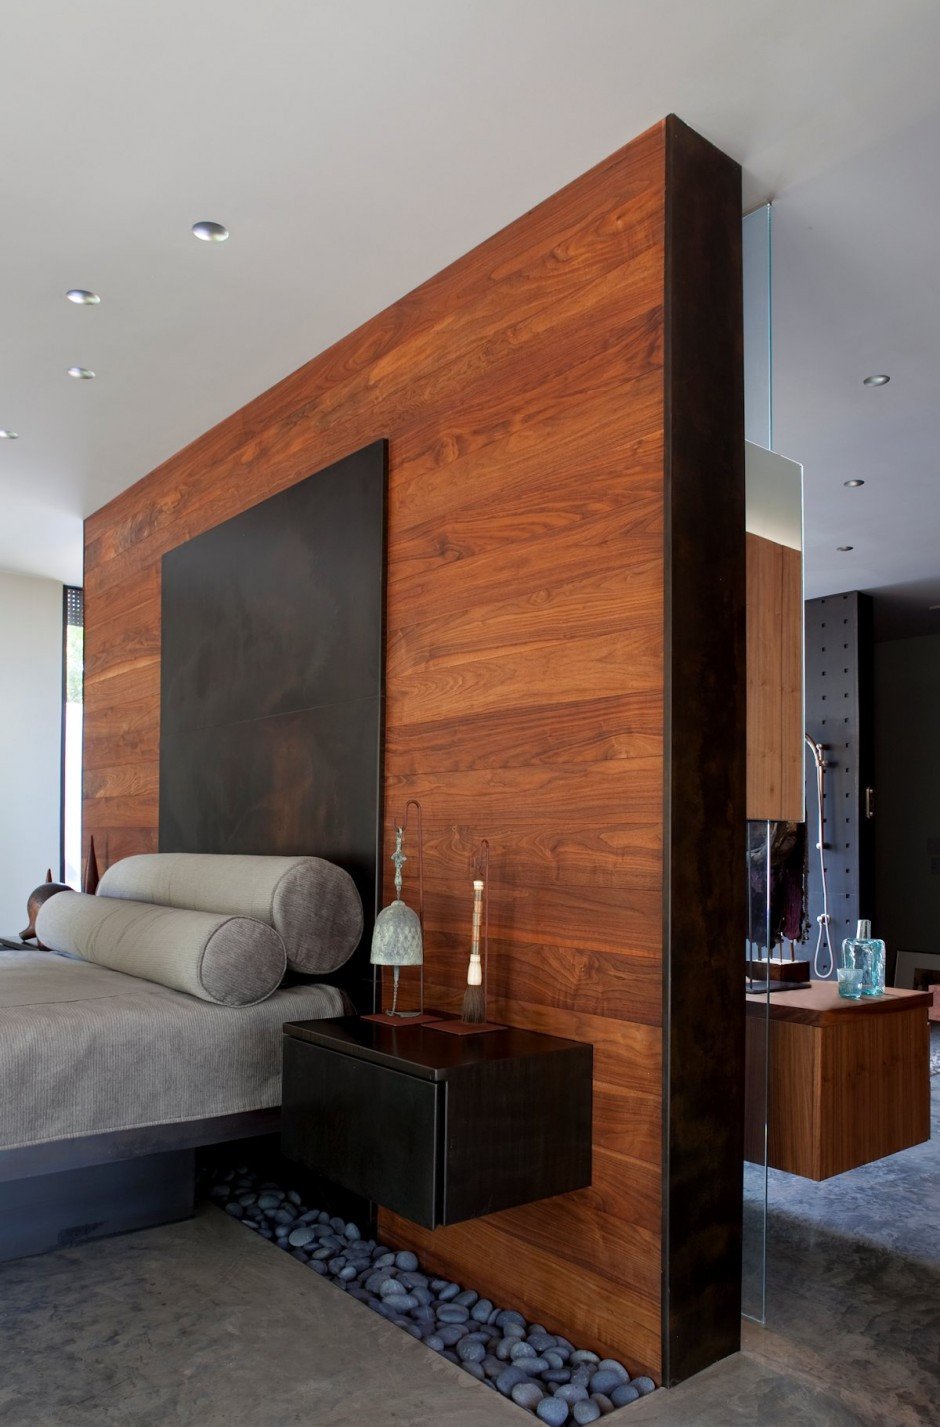 Wall Decor for Master Bedroom Lovely 50 Master Bedroom Ideas that Go Beyond the Basics